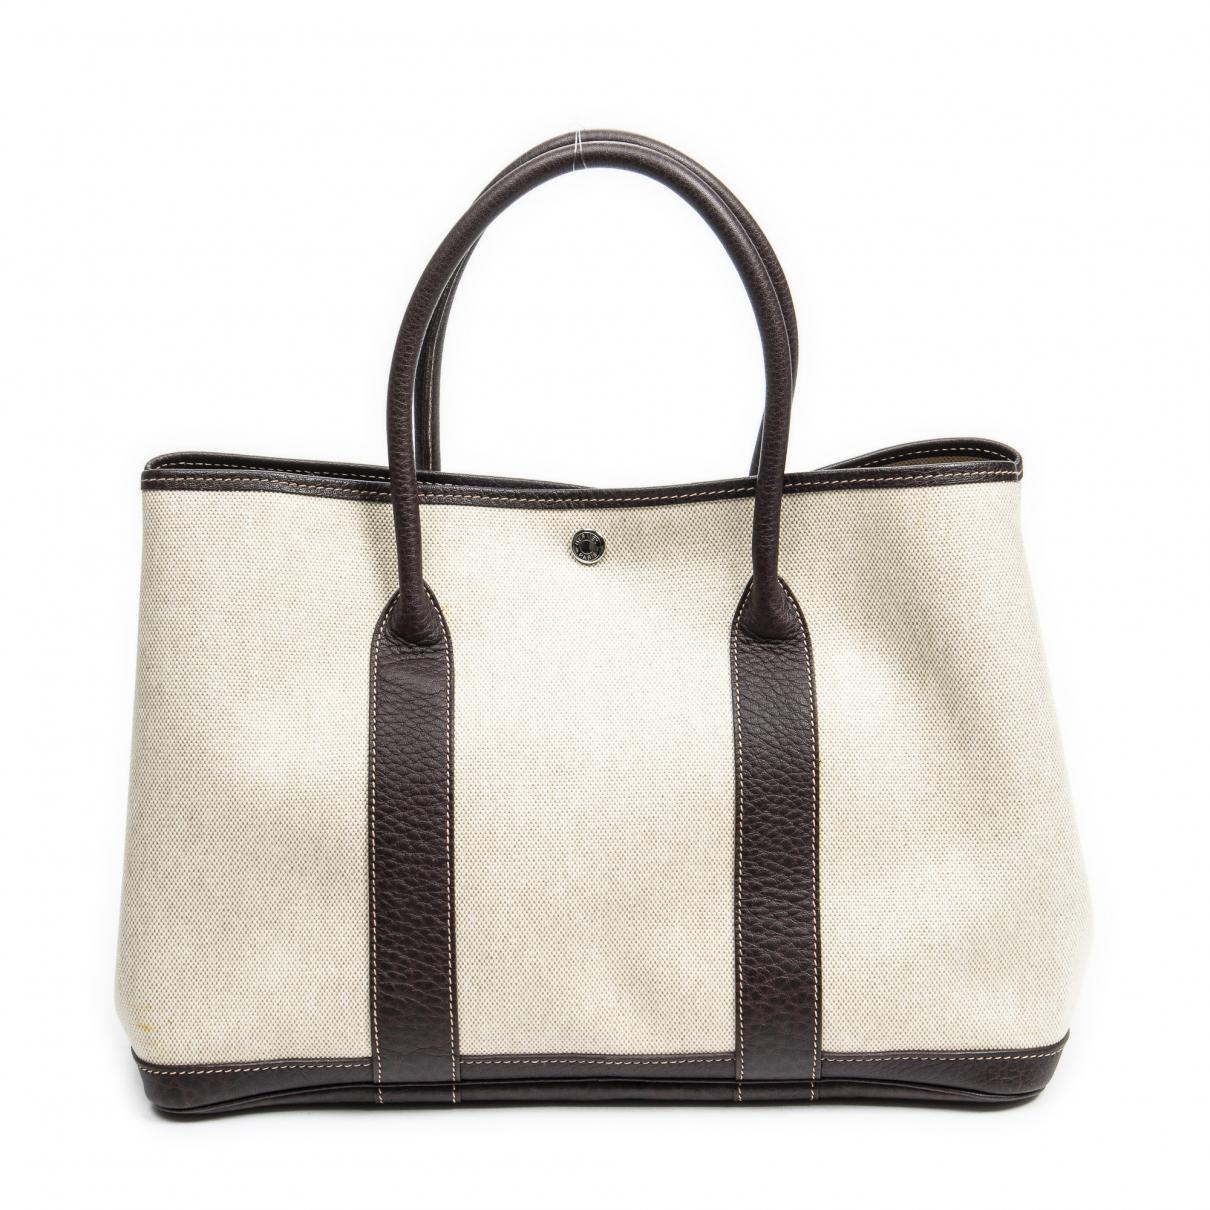 Hermès - Authenticated Garden Party Handbag - Leather Brown Plain for Women, Good Condition